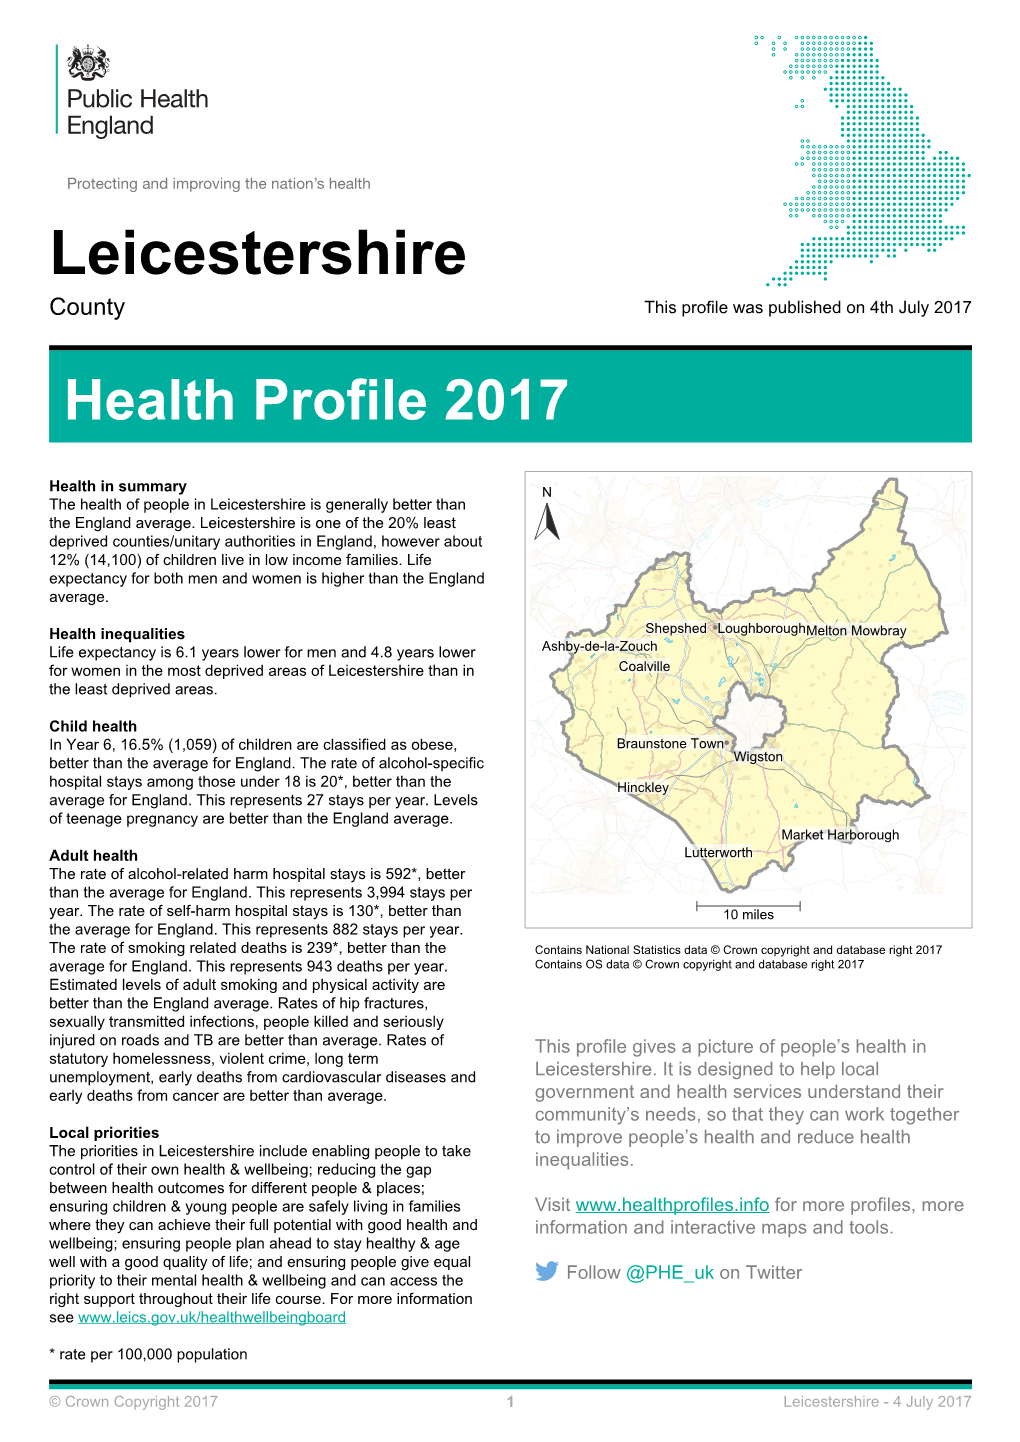 Health Profile 2017 Leicestershire